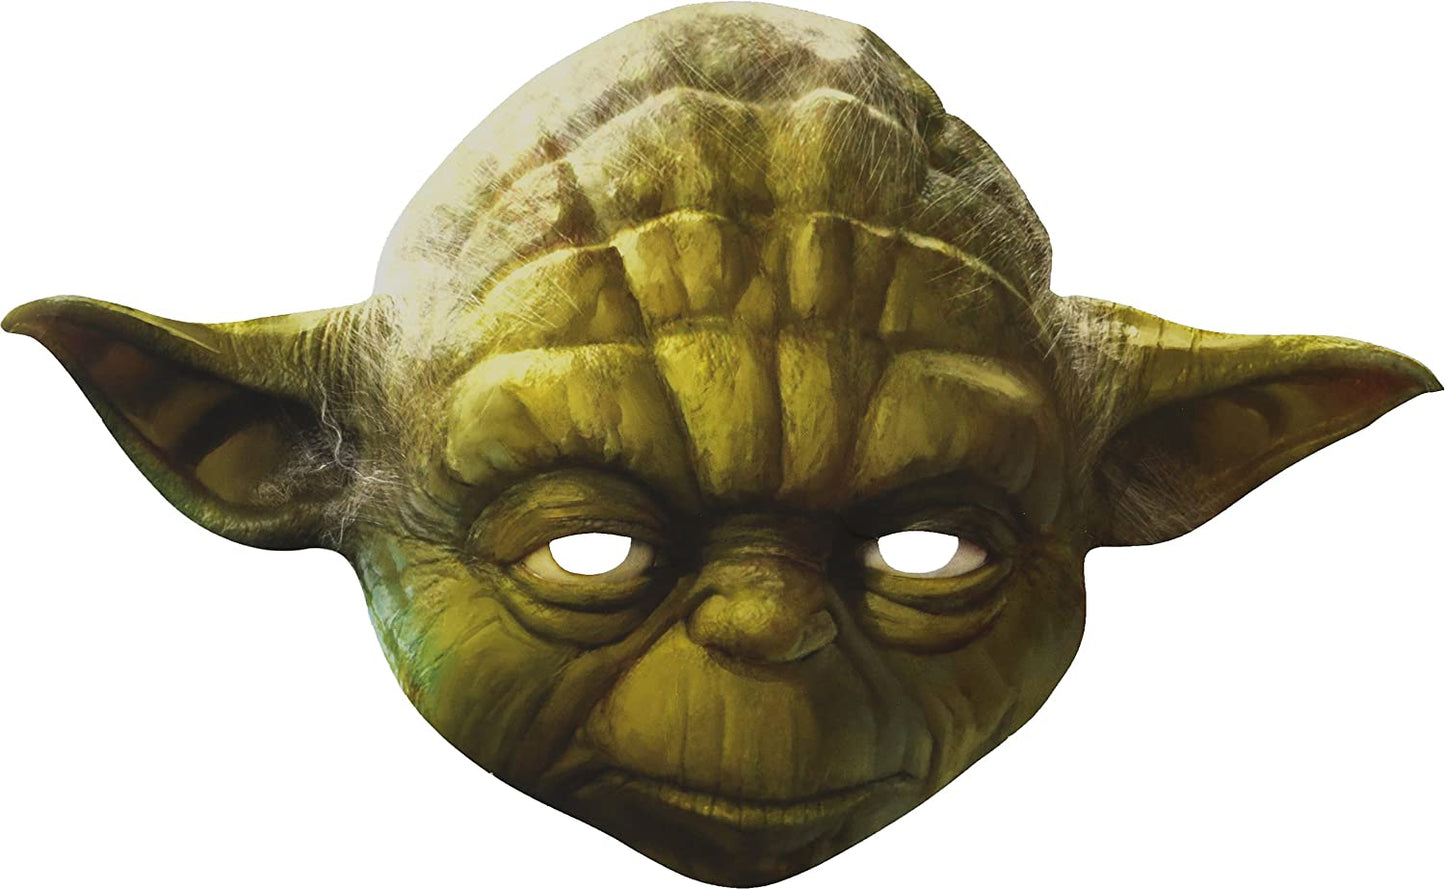 Yoda Official Star Wars Paper Cardboard Mask